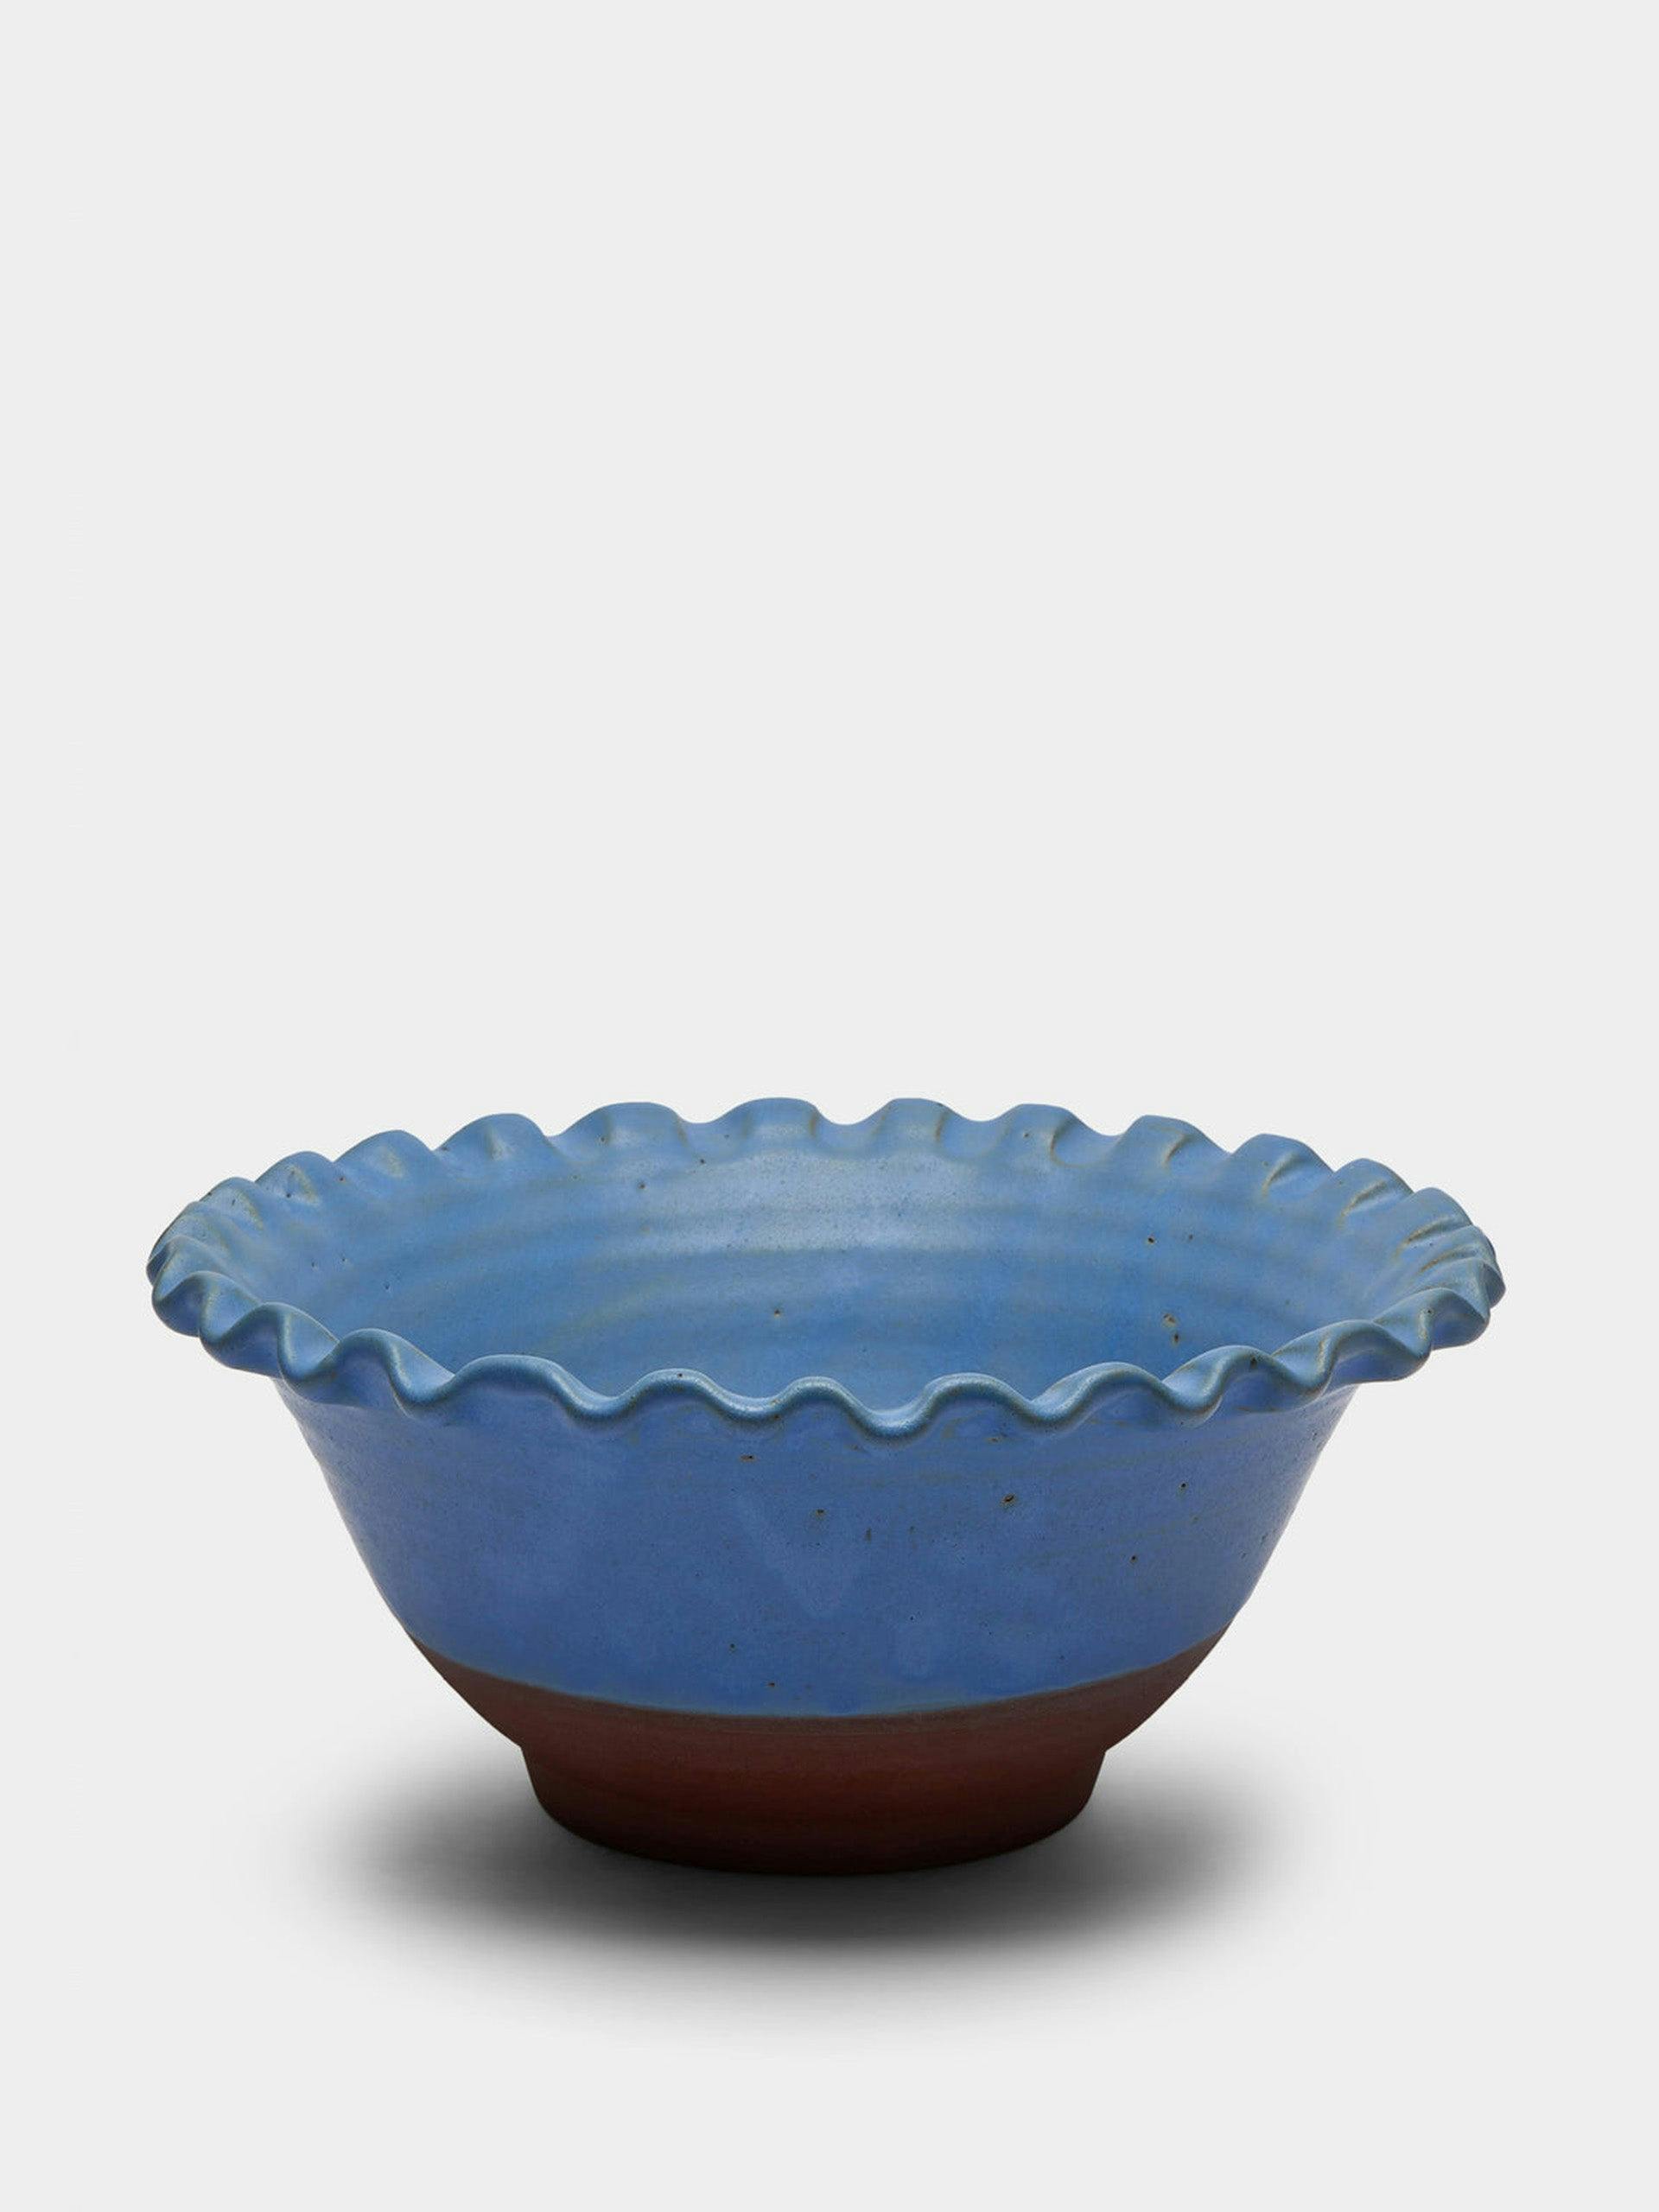 Hand-glazed ceramic large serving bowl